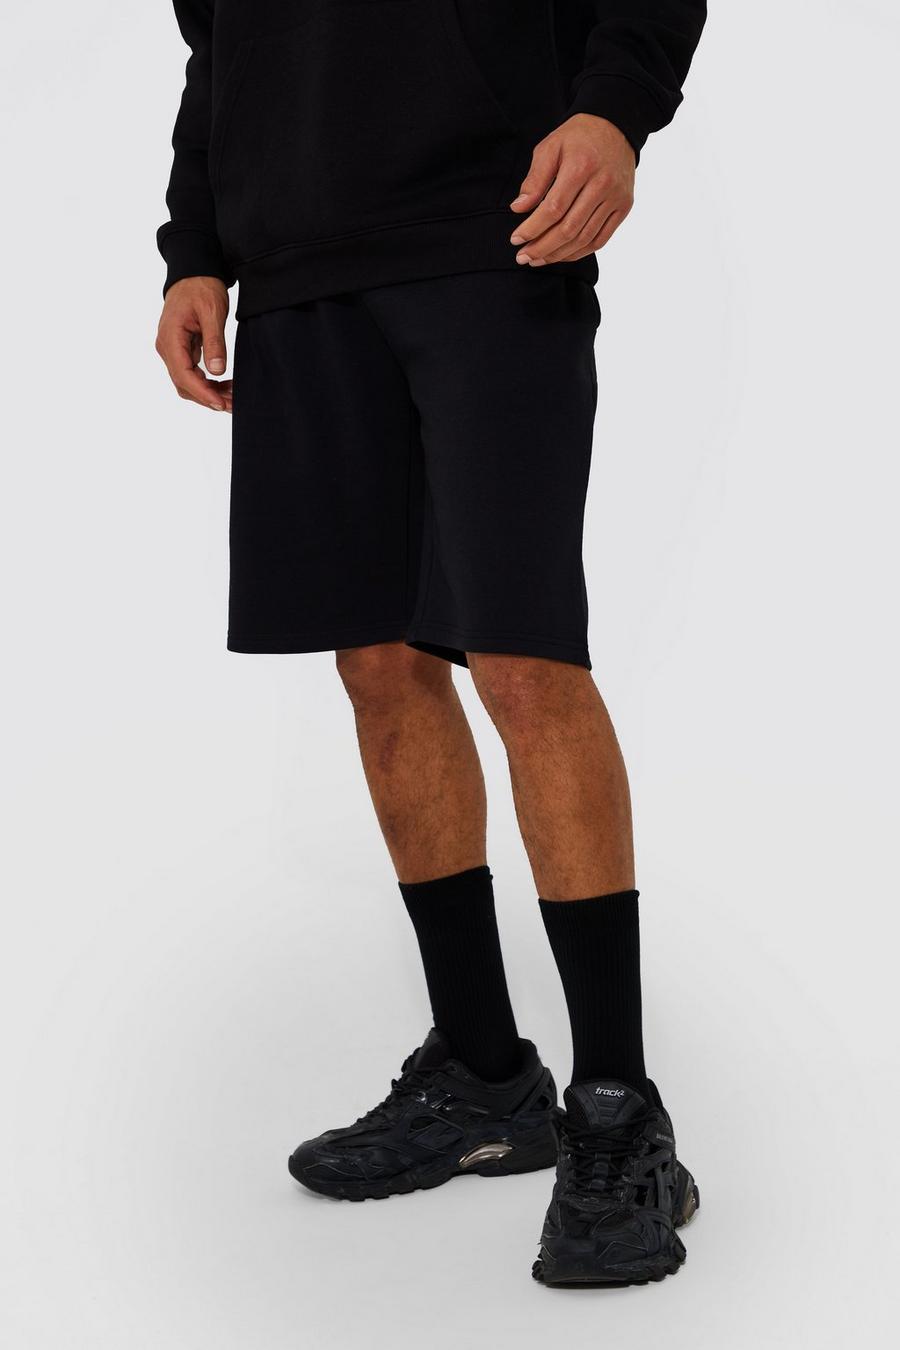 Black שורט באורך בינוני מבד ג'רסי בשילוב בכותנת REEL, לגברים גבוהים